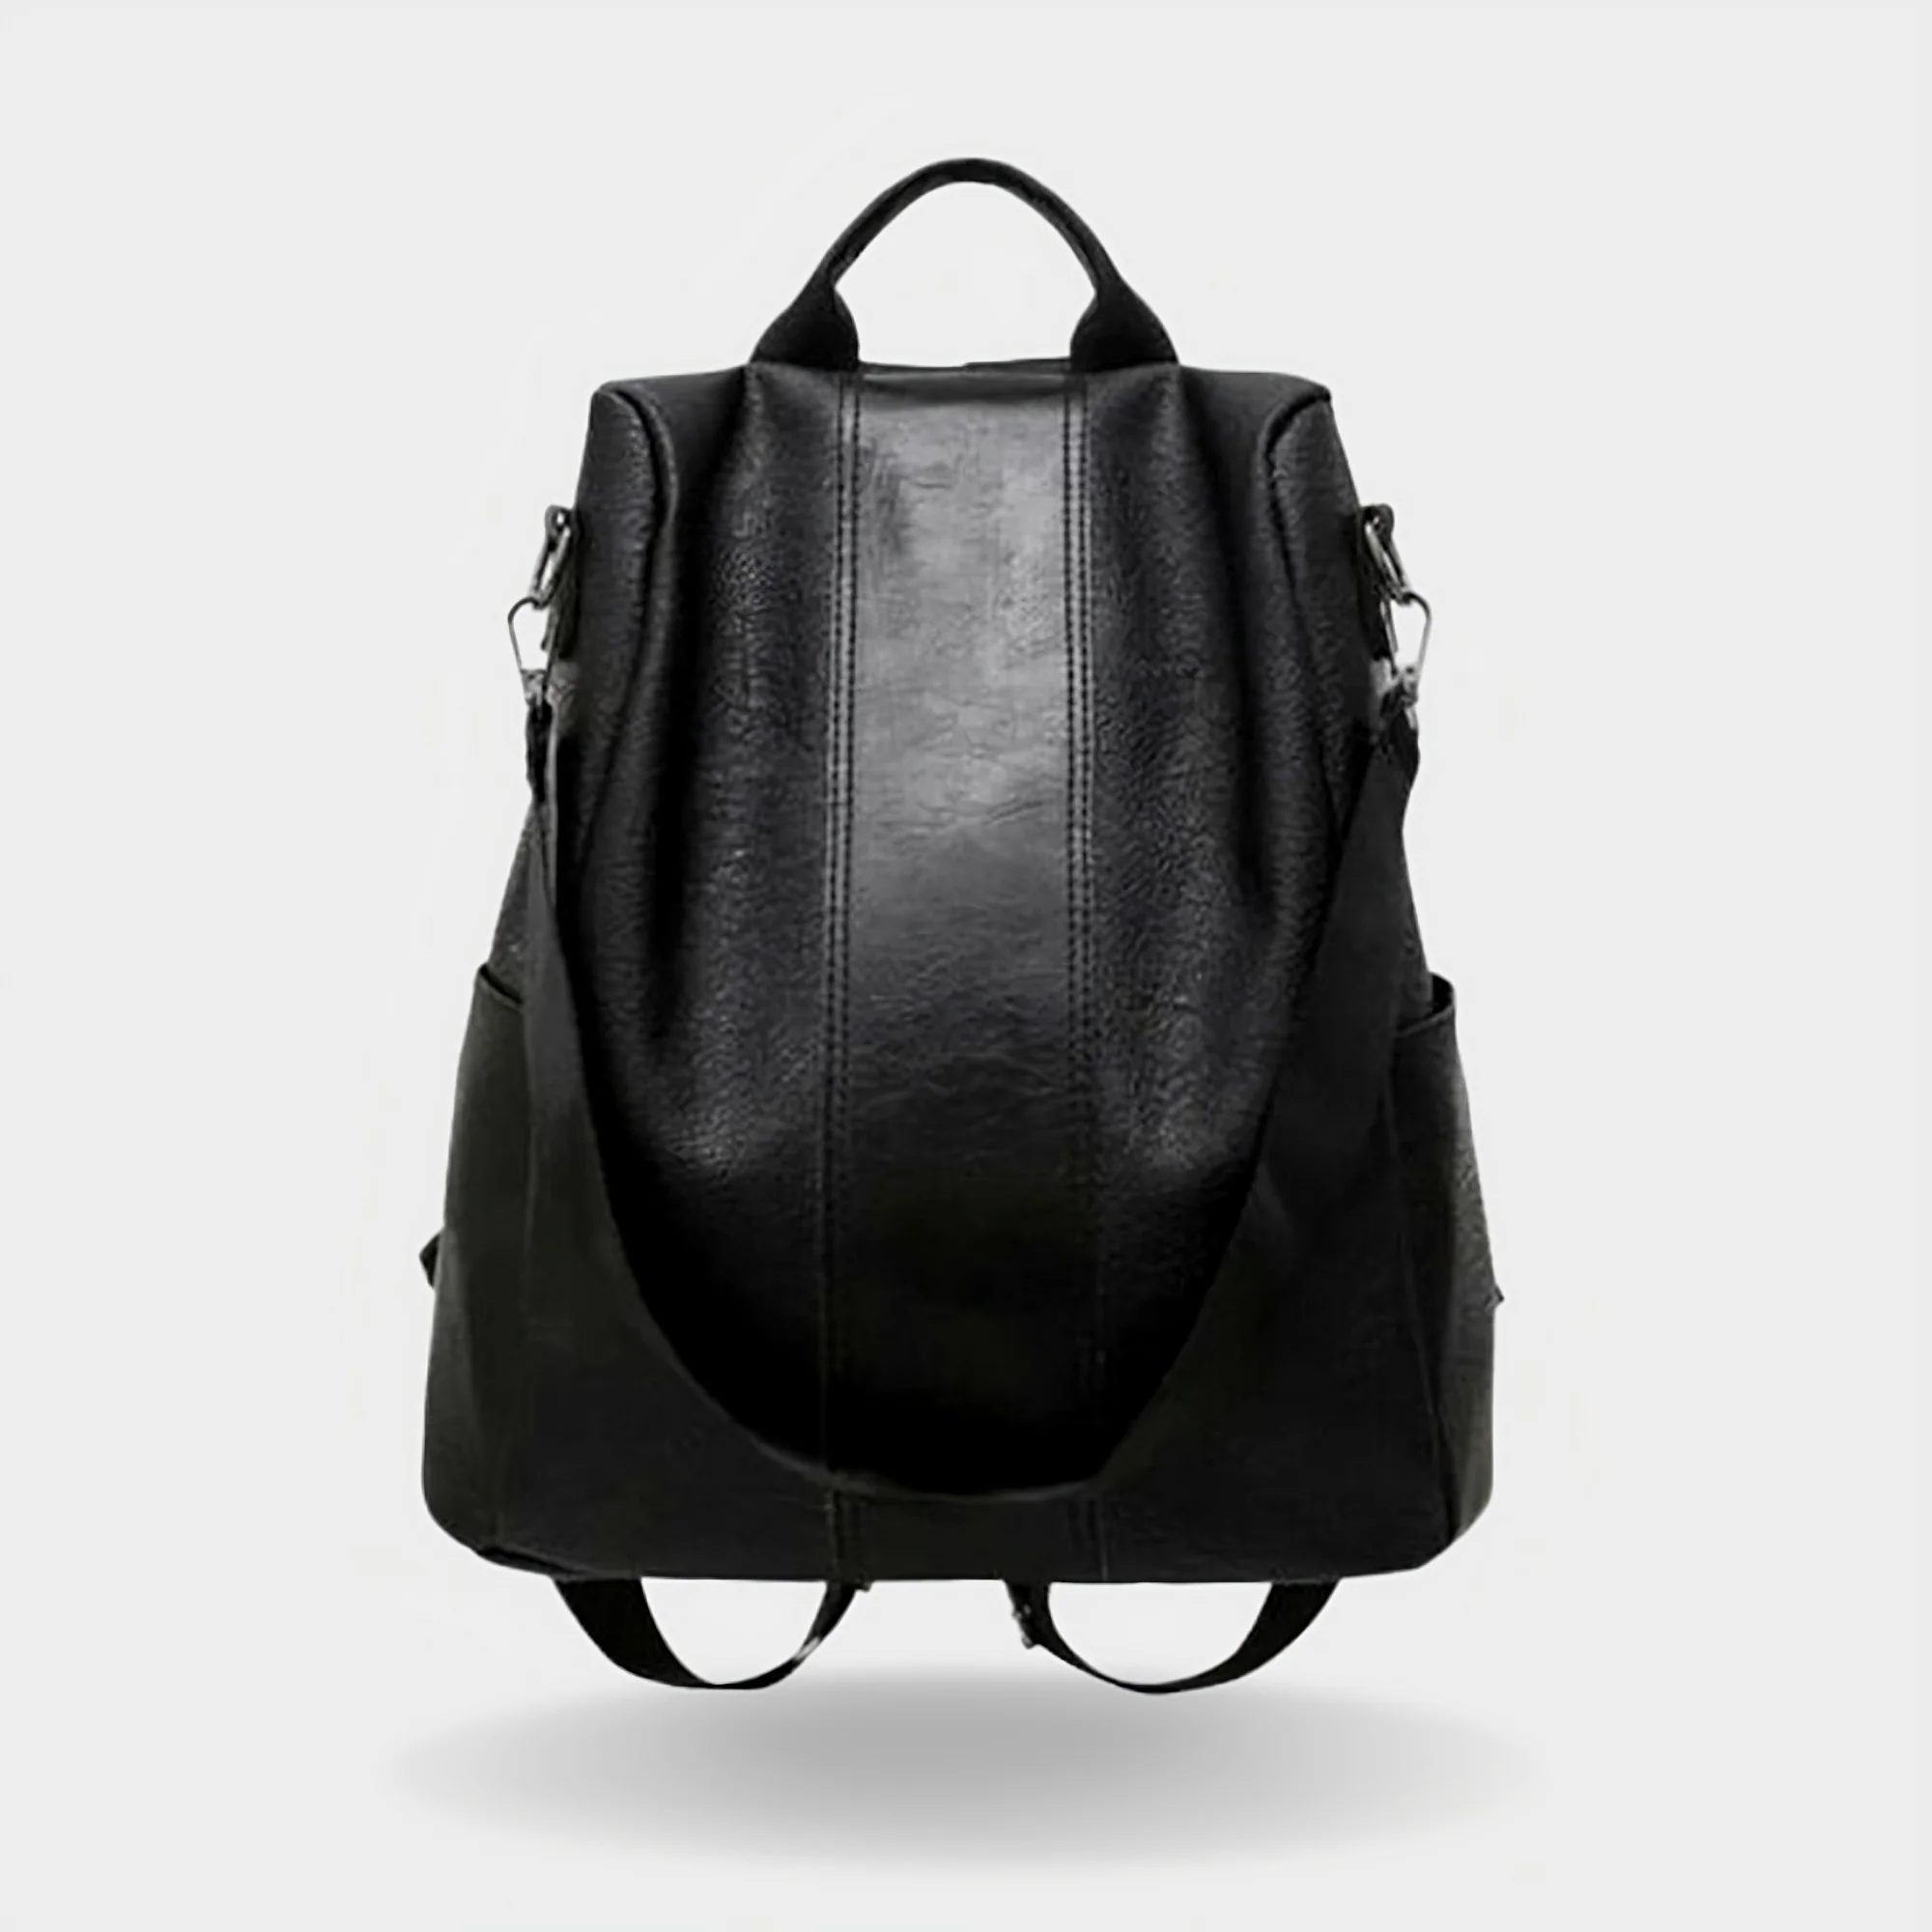 AFORA | Anti-Theft Backpack®